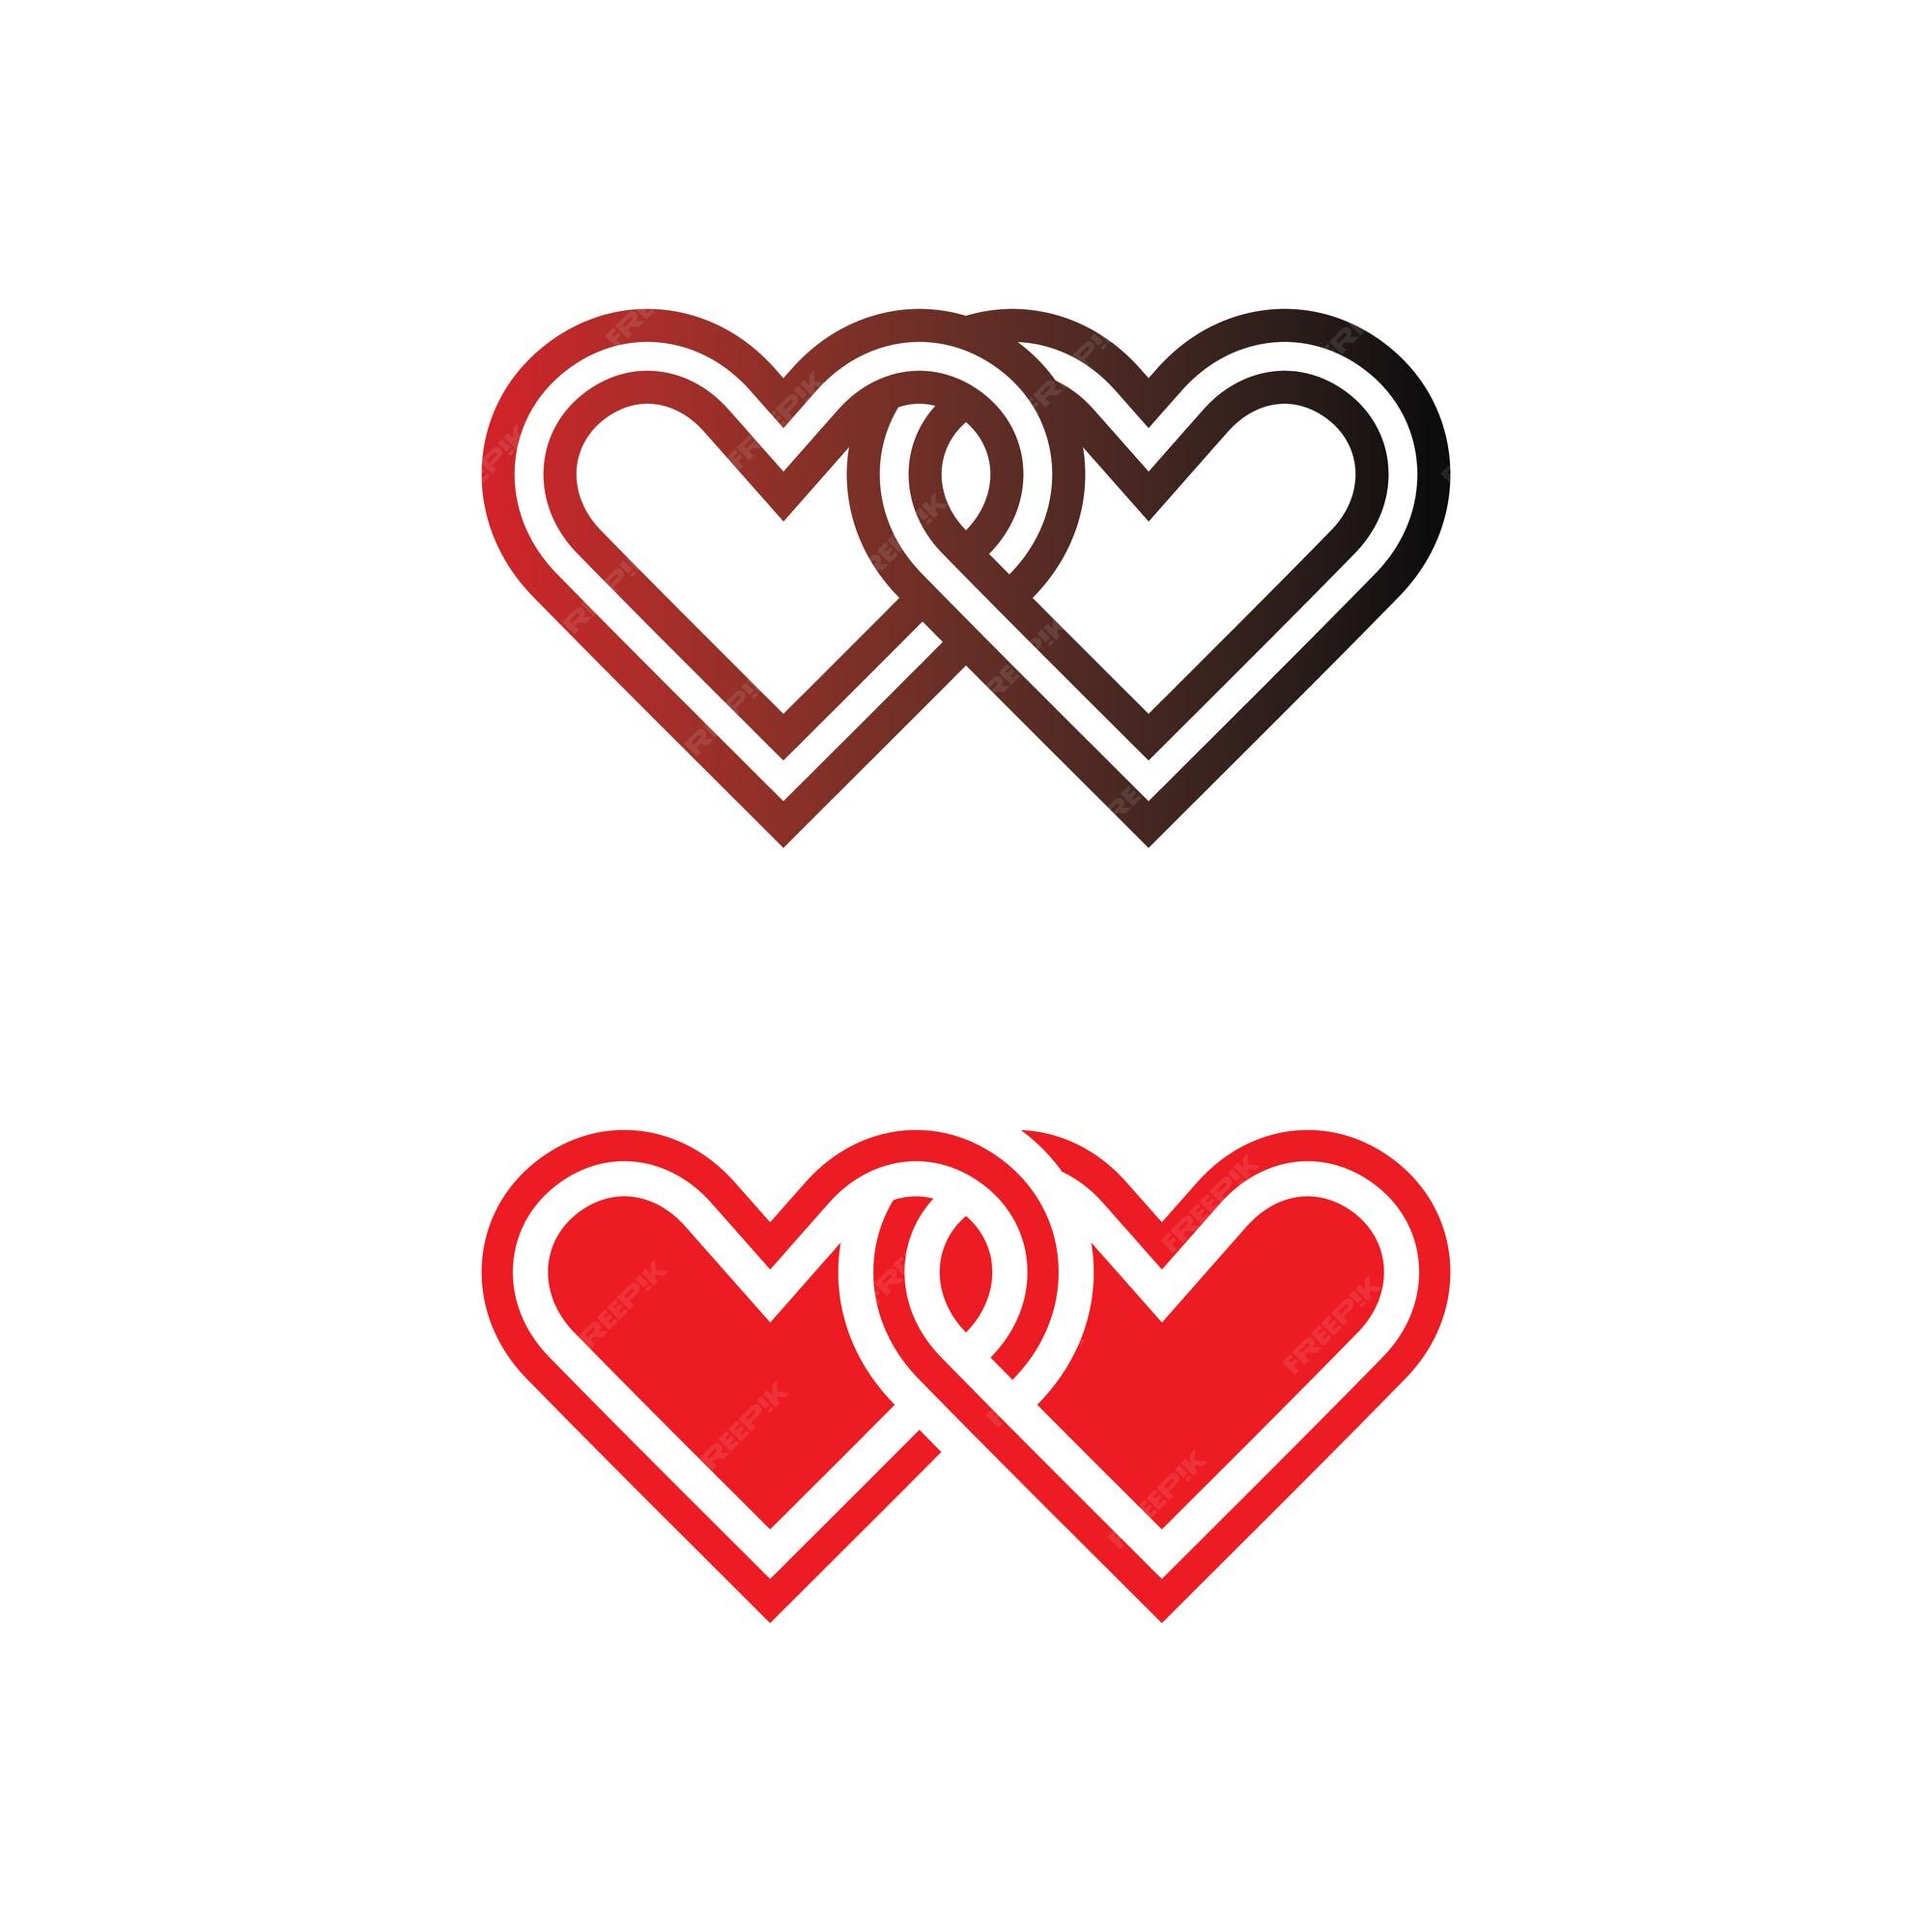 Premium Vector  Love heart logo and symbol vector